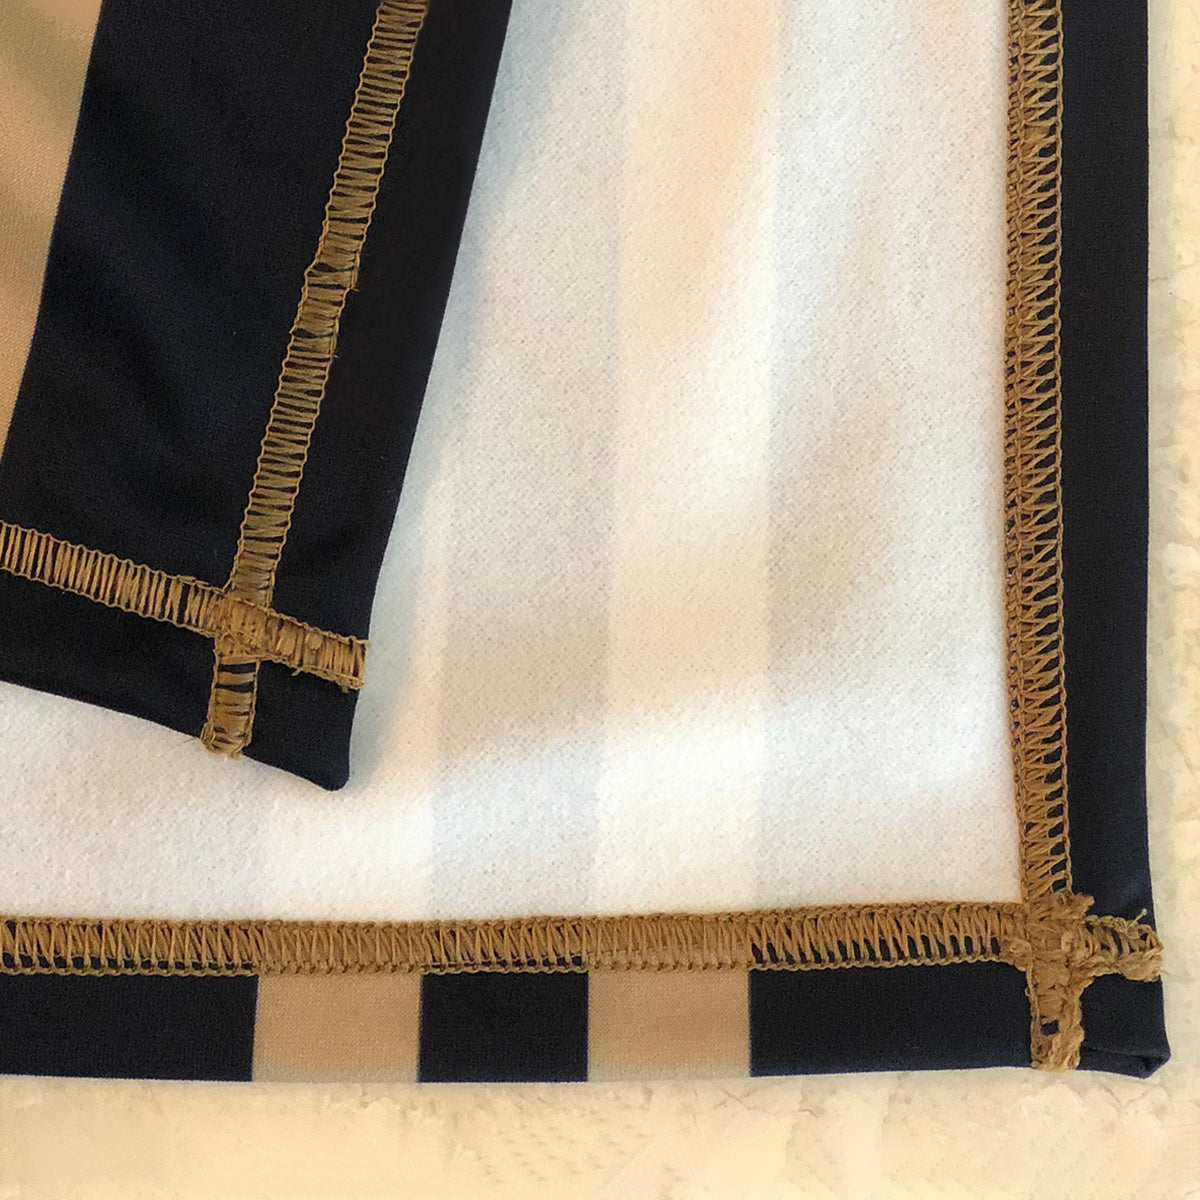 UAPB Golden Lions Game Day Soft Premium Fleece Black Throw Blanket 40 x 58 Logo and Stripes